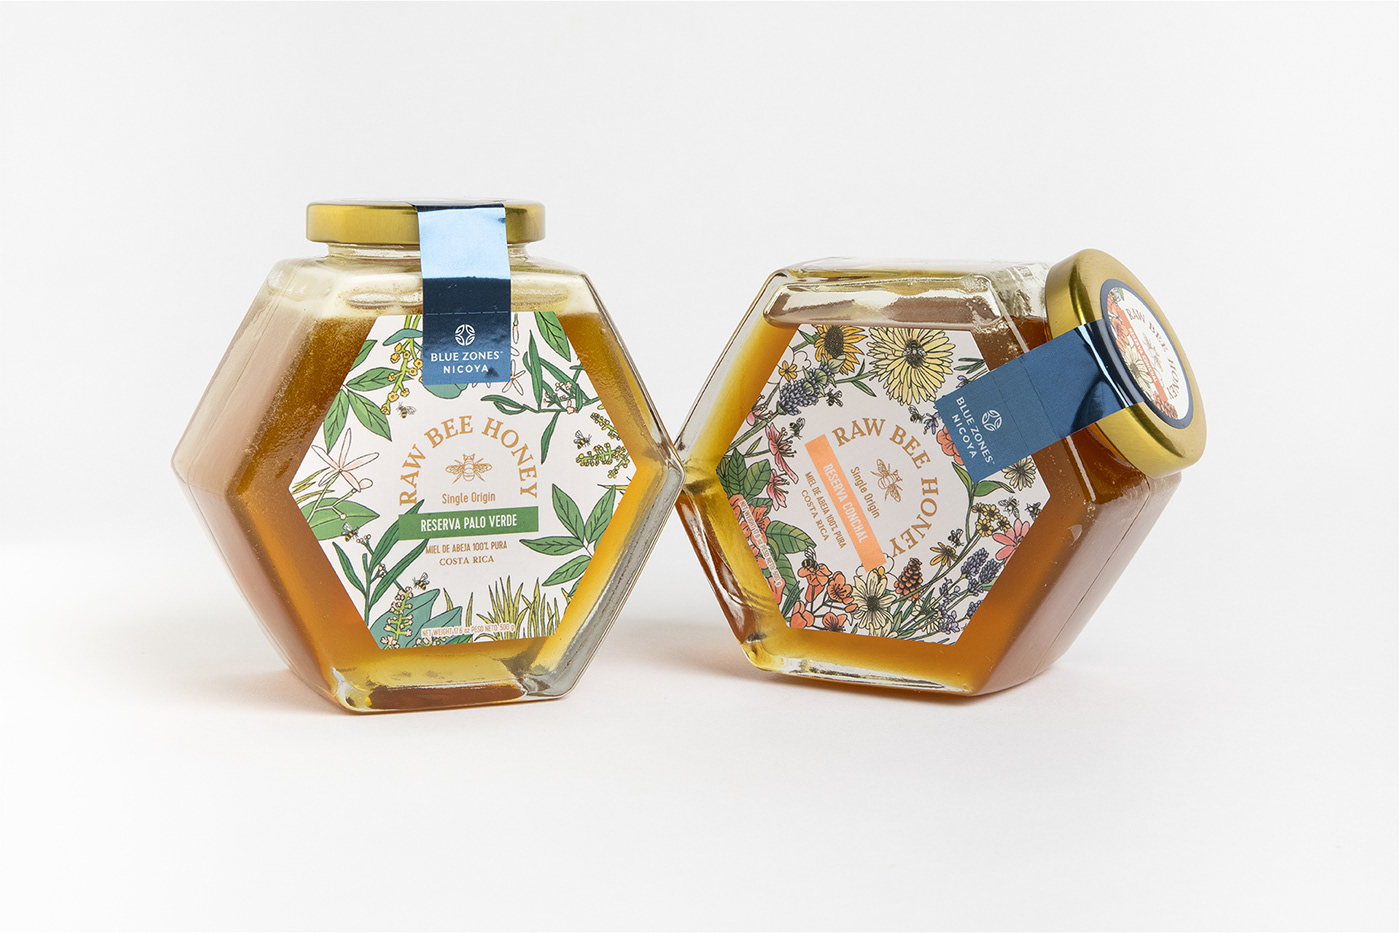 Food  honey Honey packaging ILLUSTRATION  natural Packaging Single origin sweet